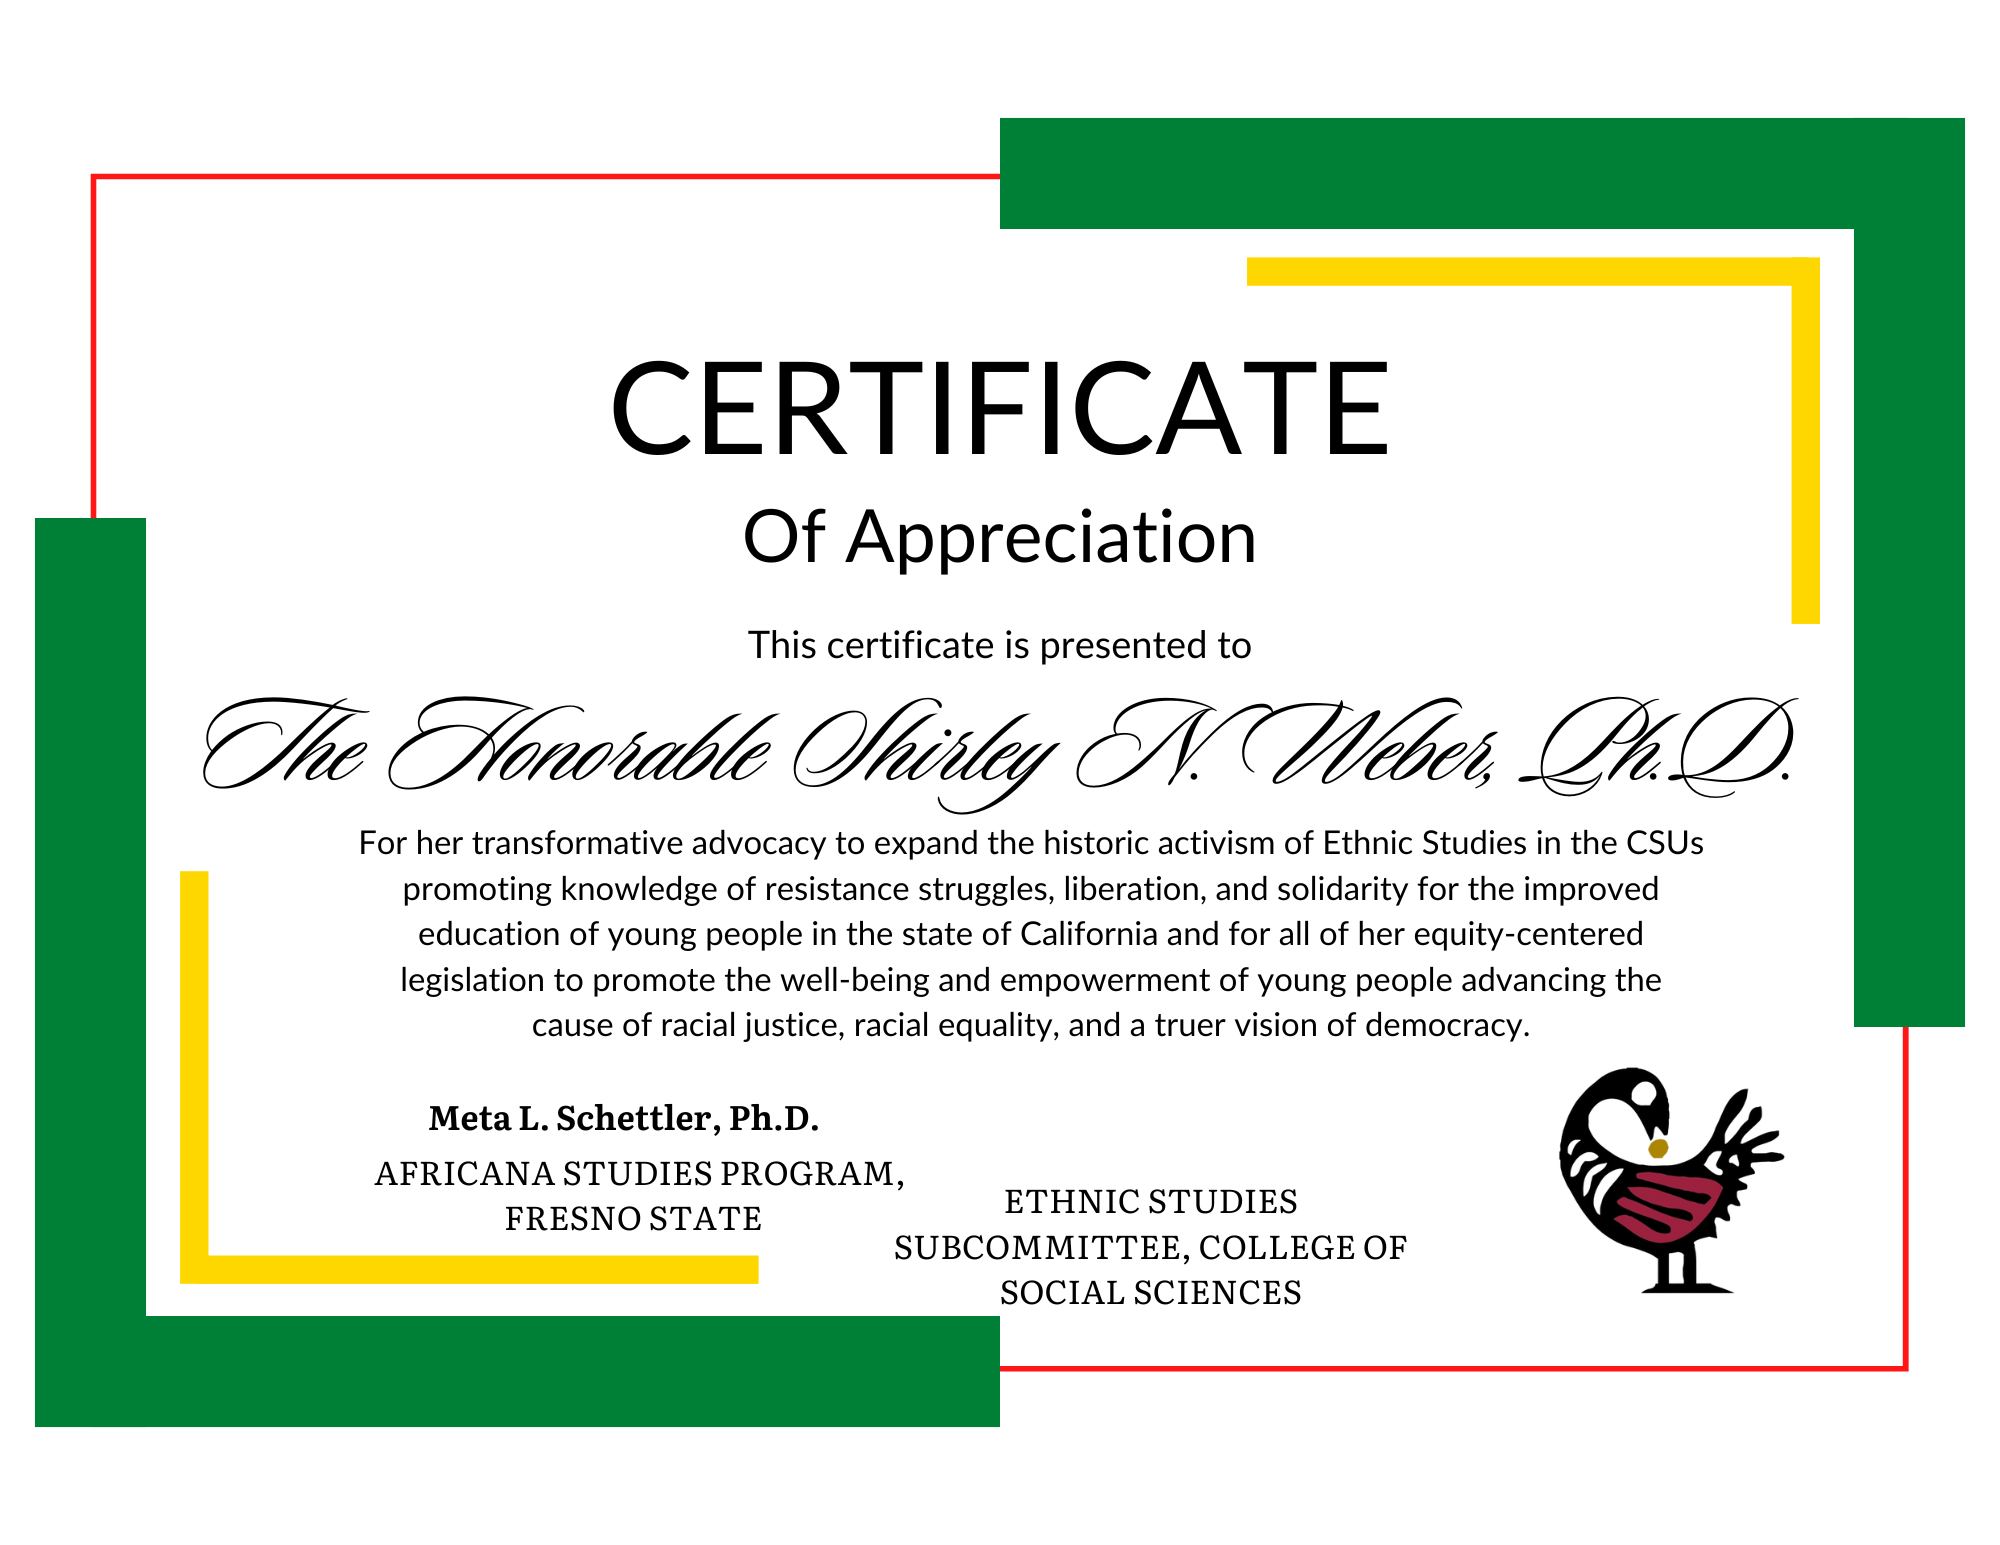 Certificate of Appreciation for Dr. Weber